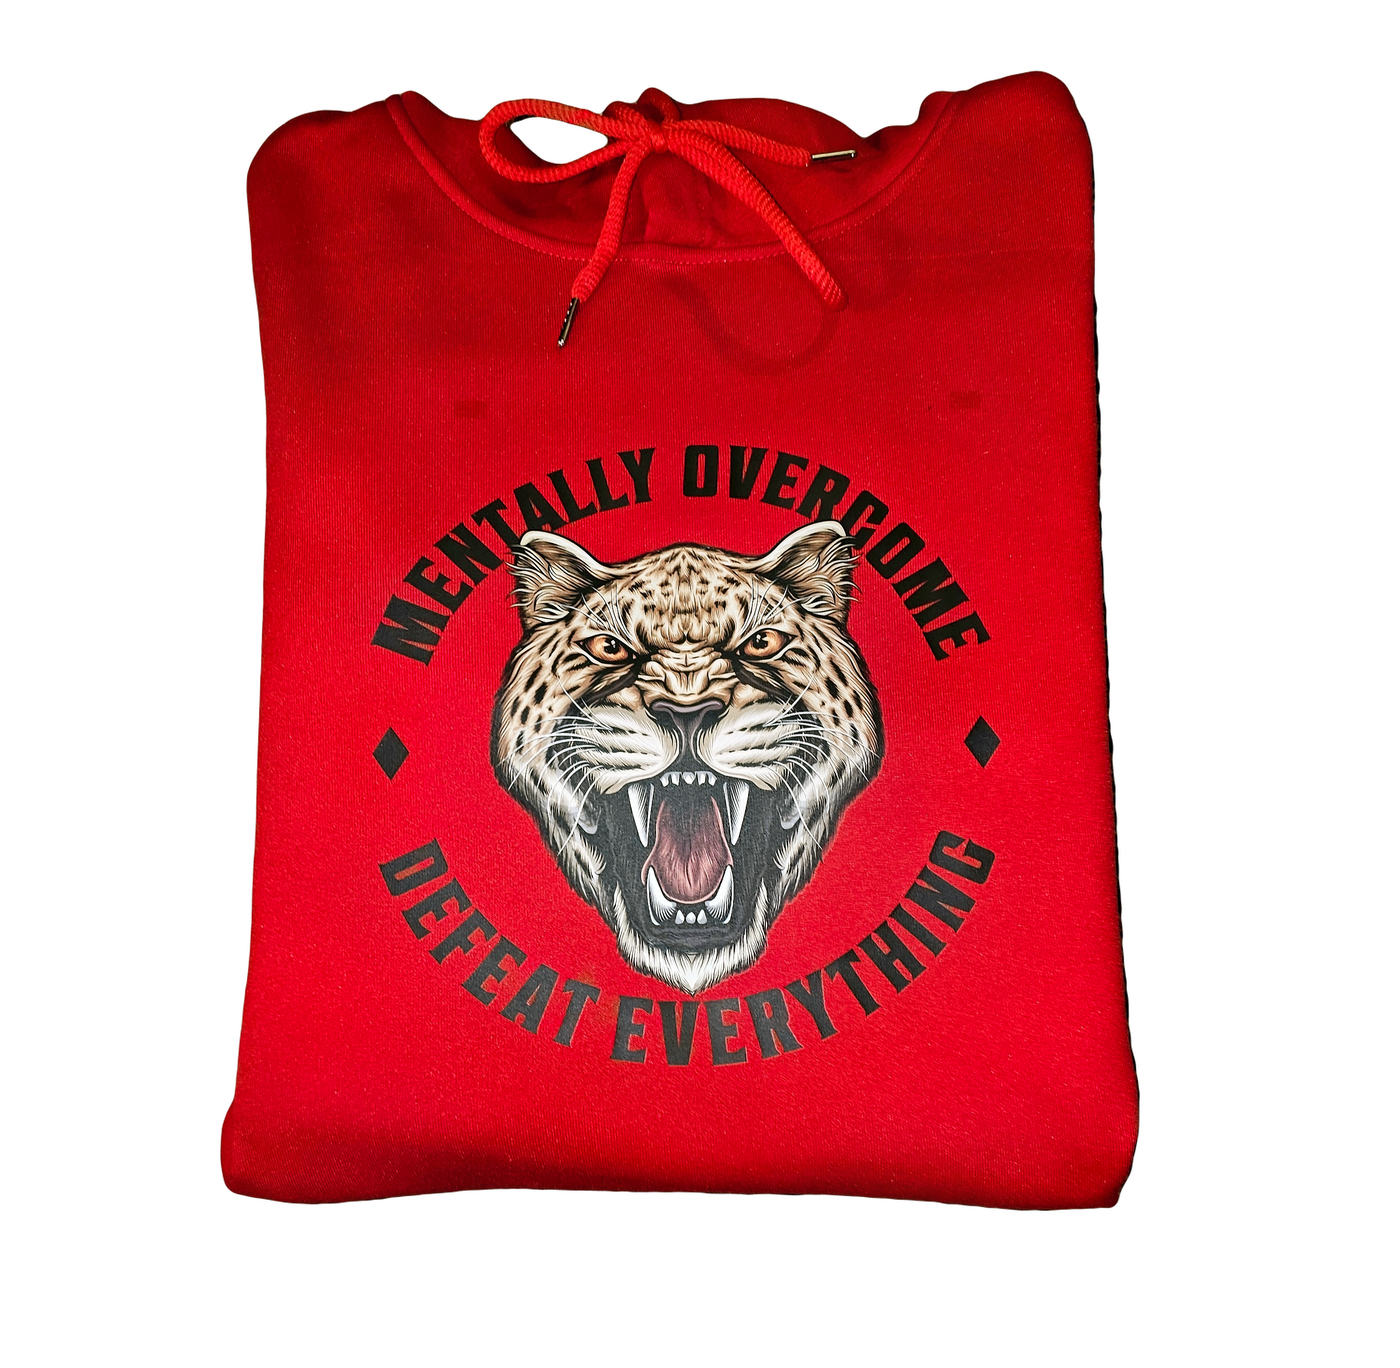 Cheetah Brand Sweatshirt Blank Red Made In USA Size Medium Long